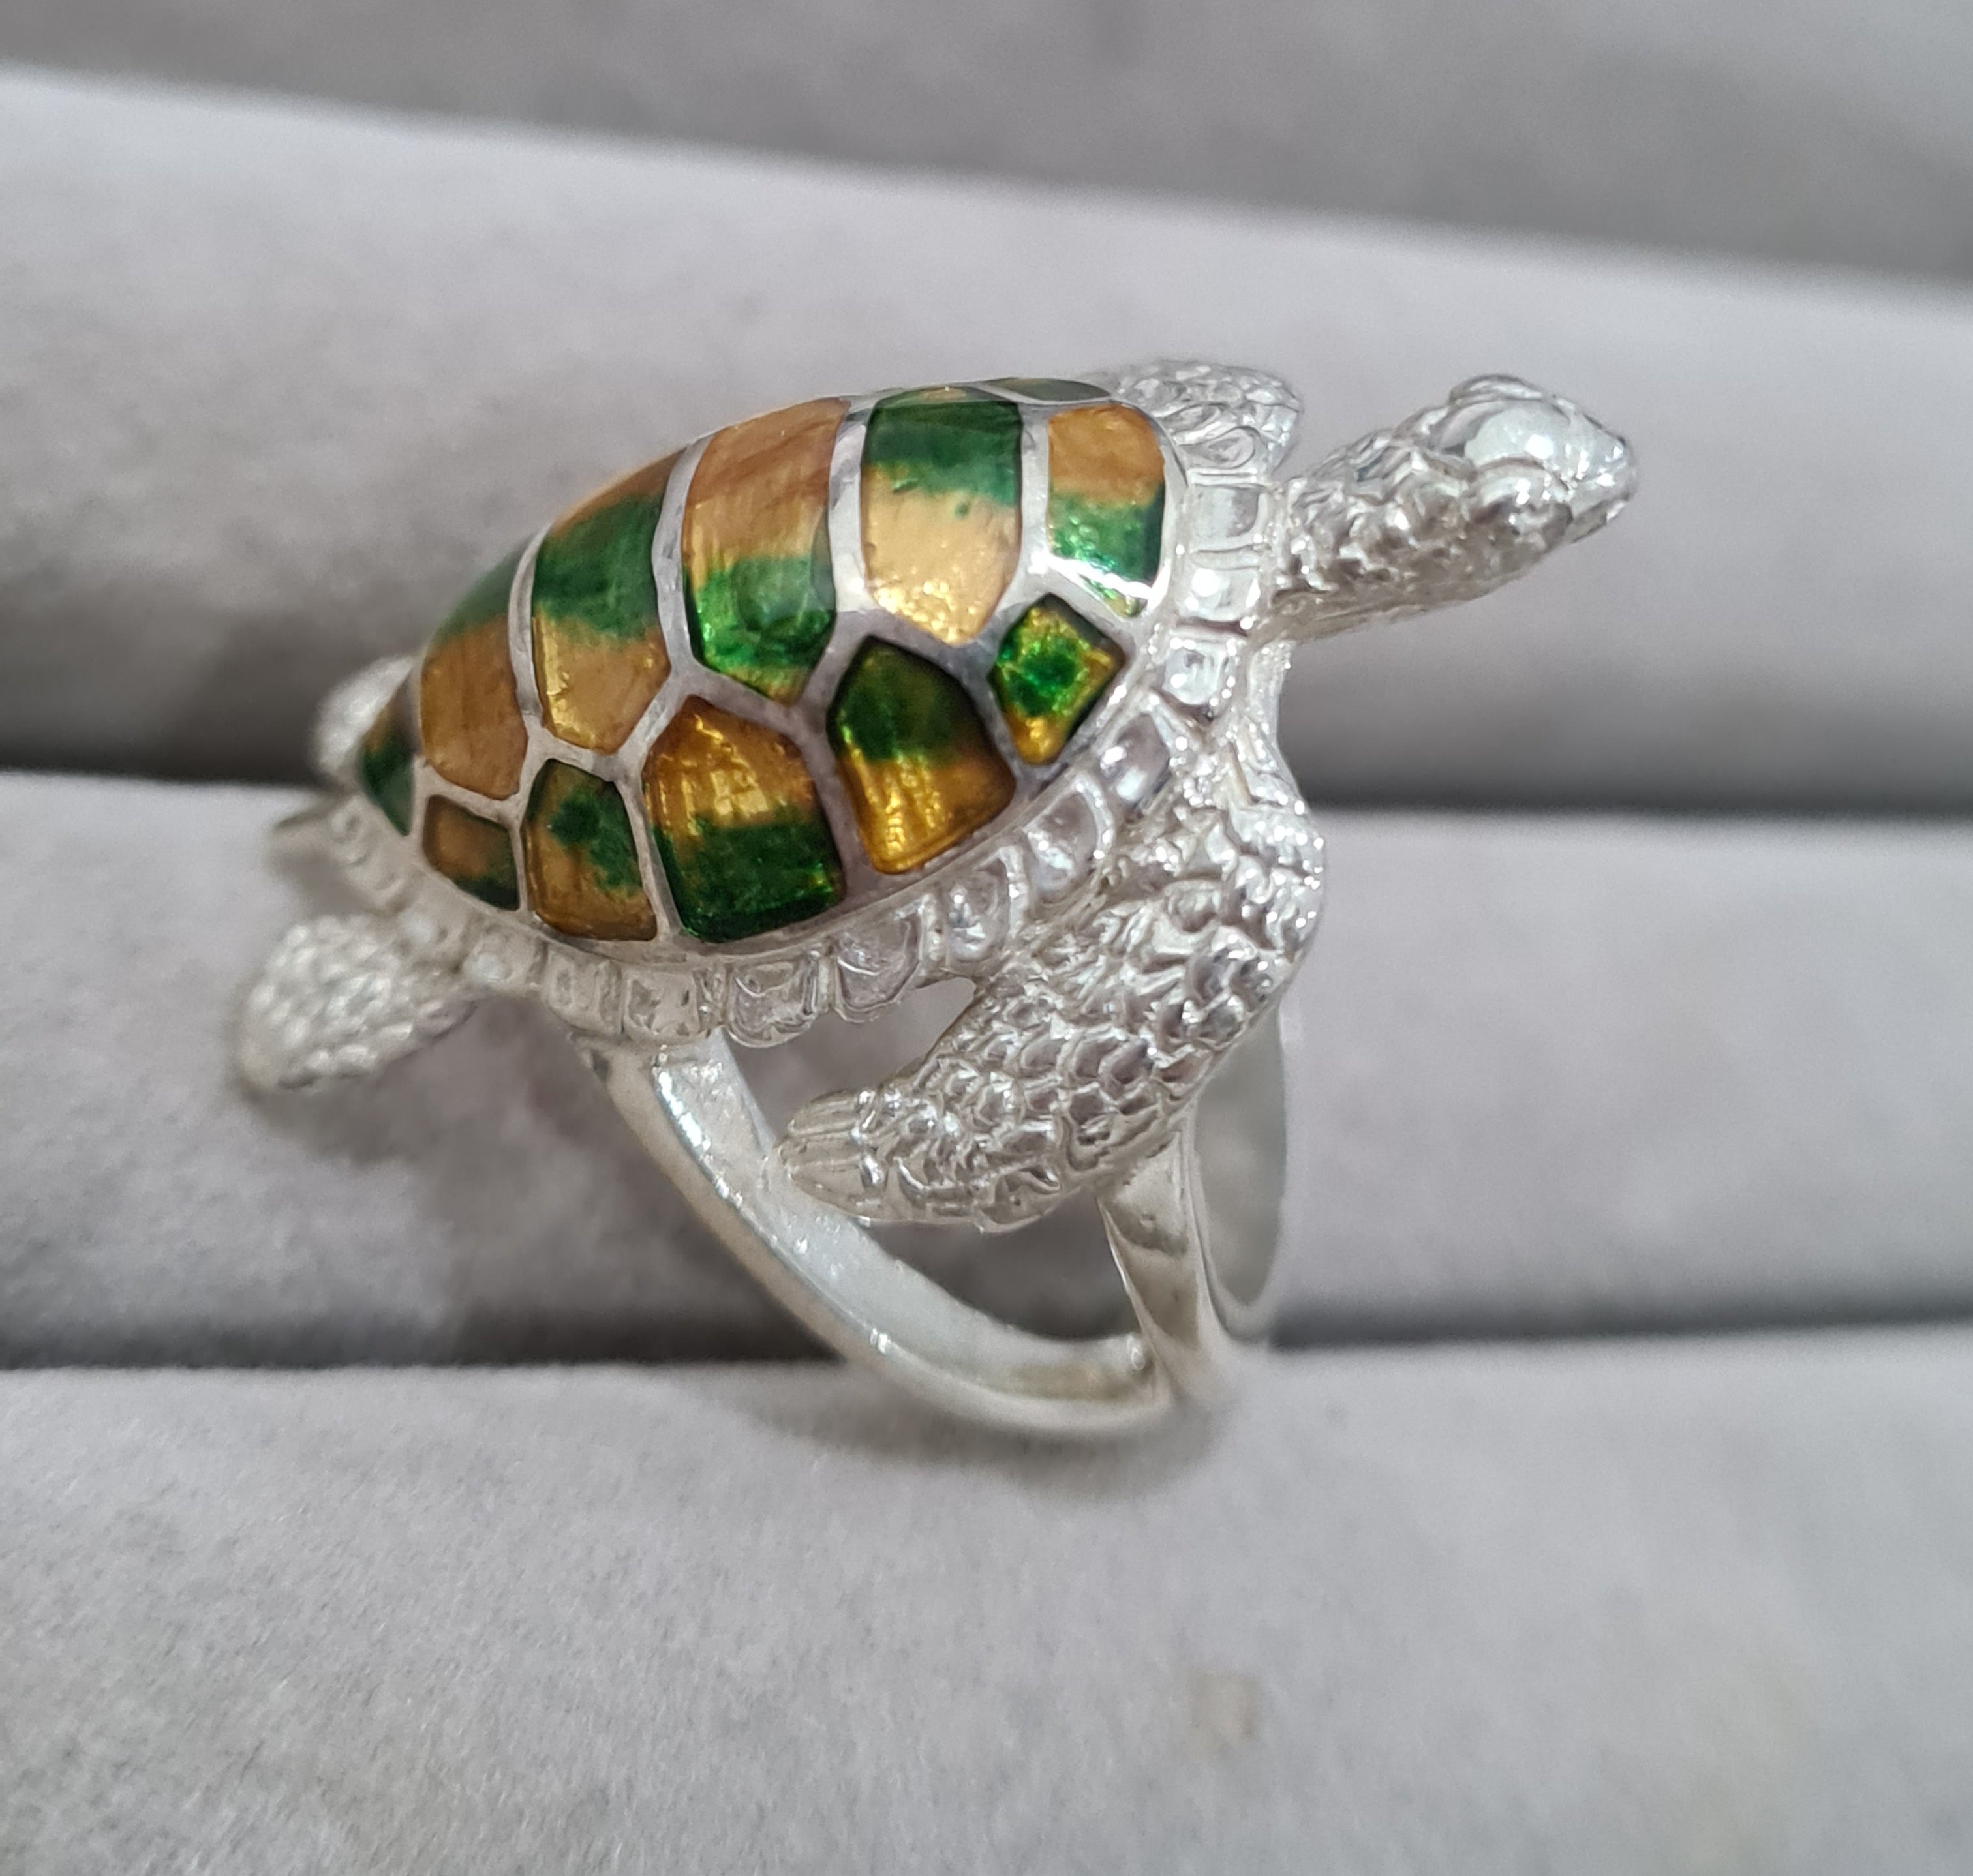 Sea Turtle Ring